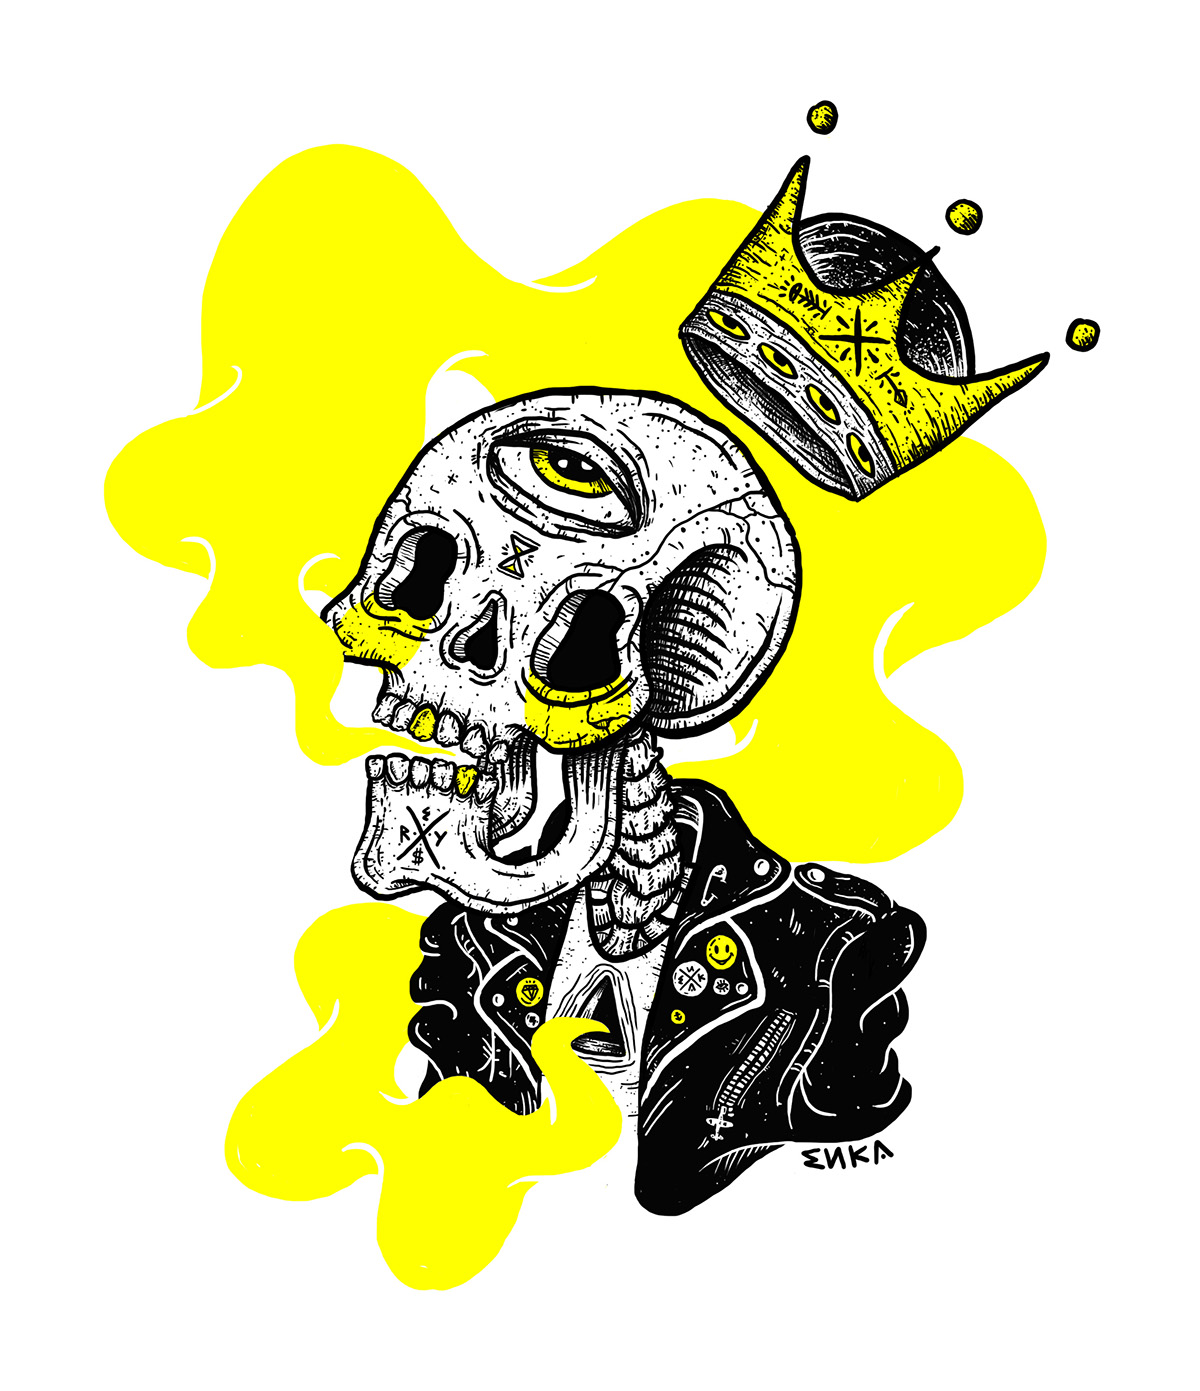 ENKA enkailustracion Peppersoul king skull black n yellow smoke arte colecction bogota colombia